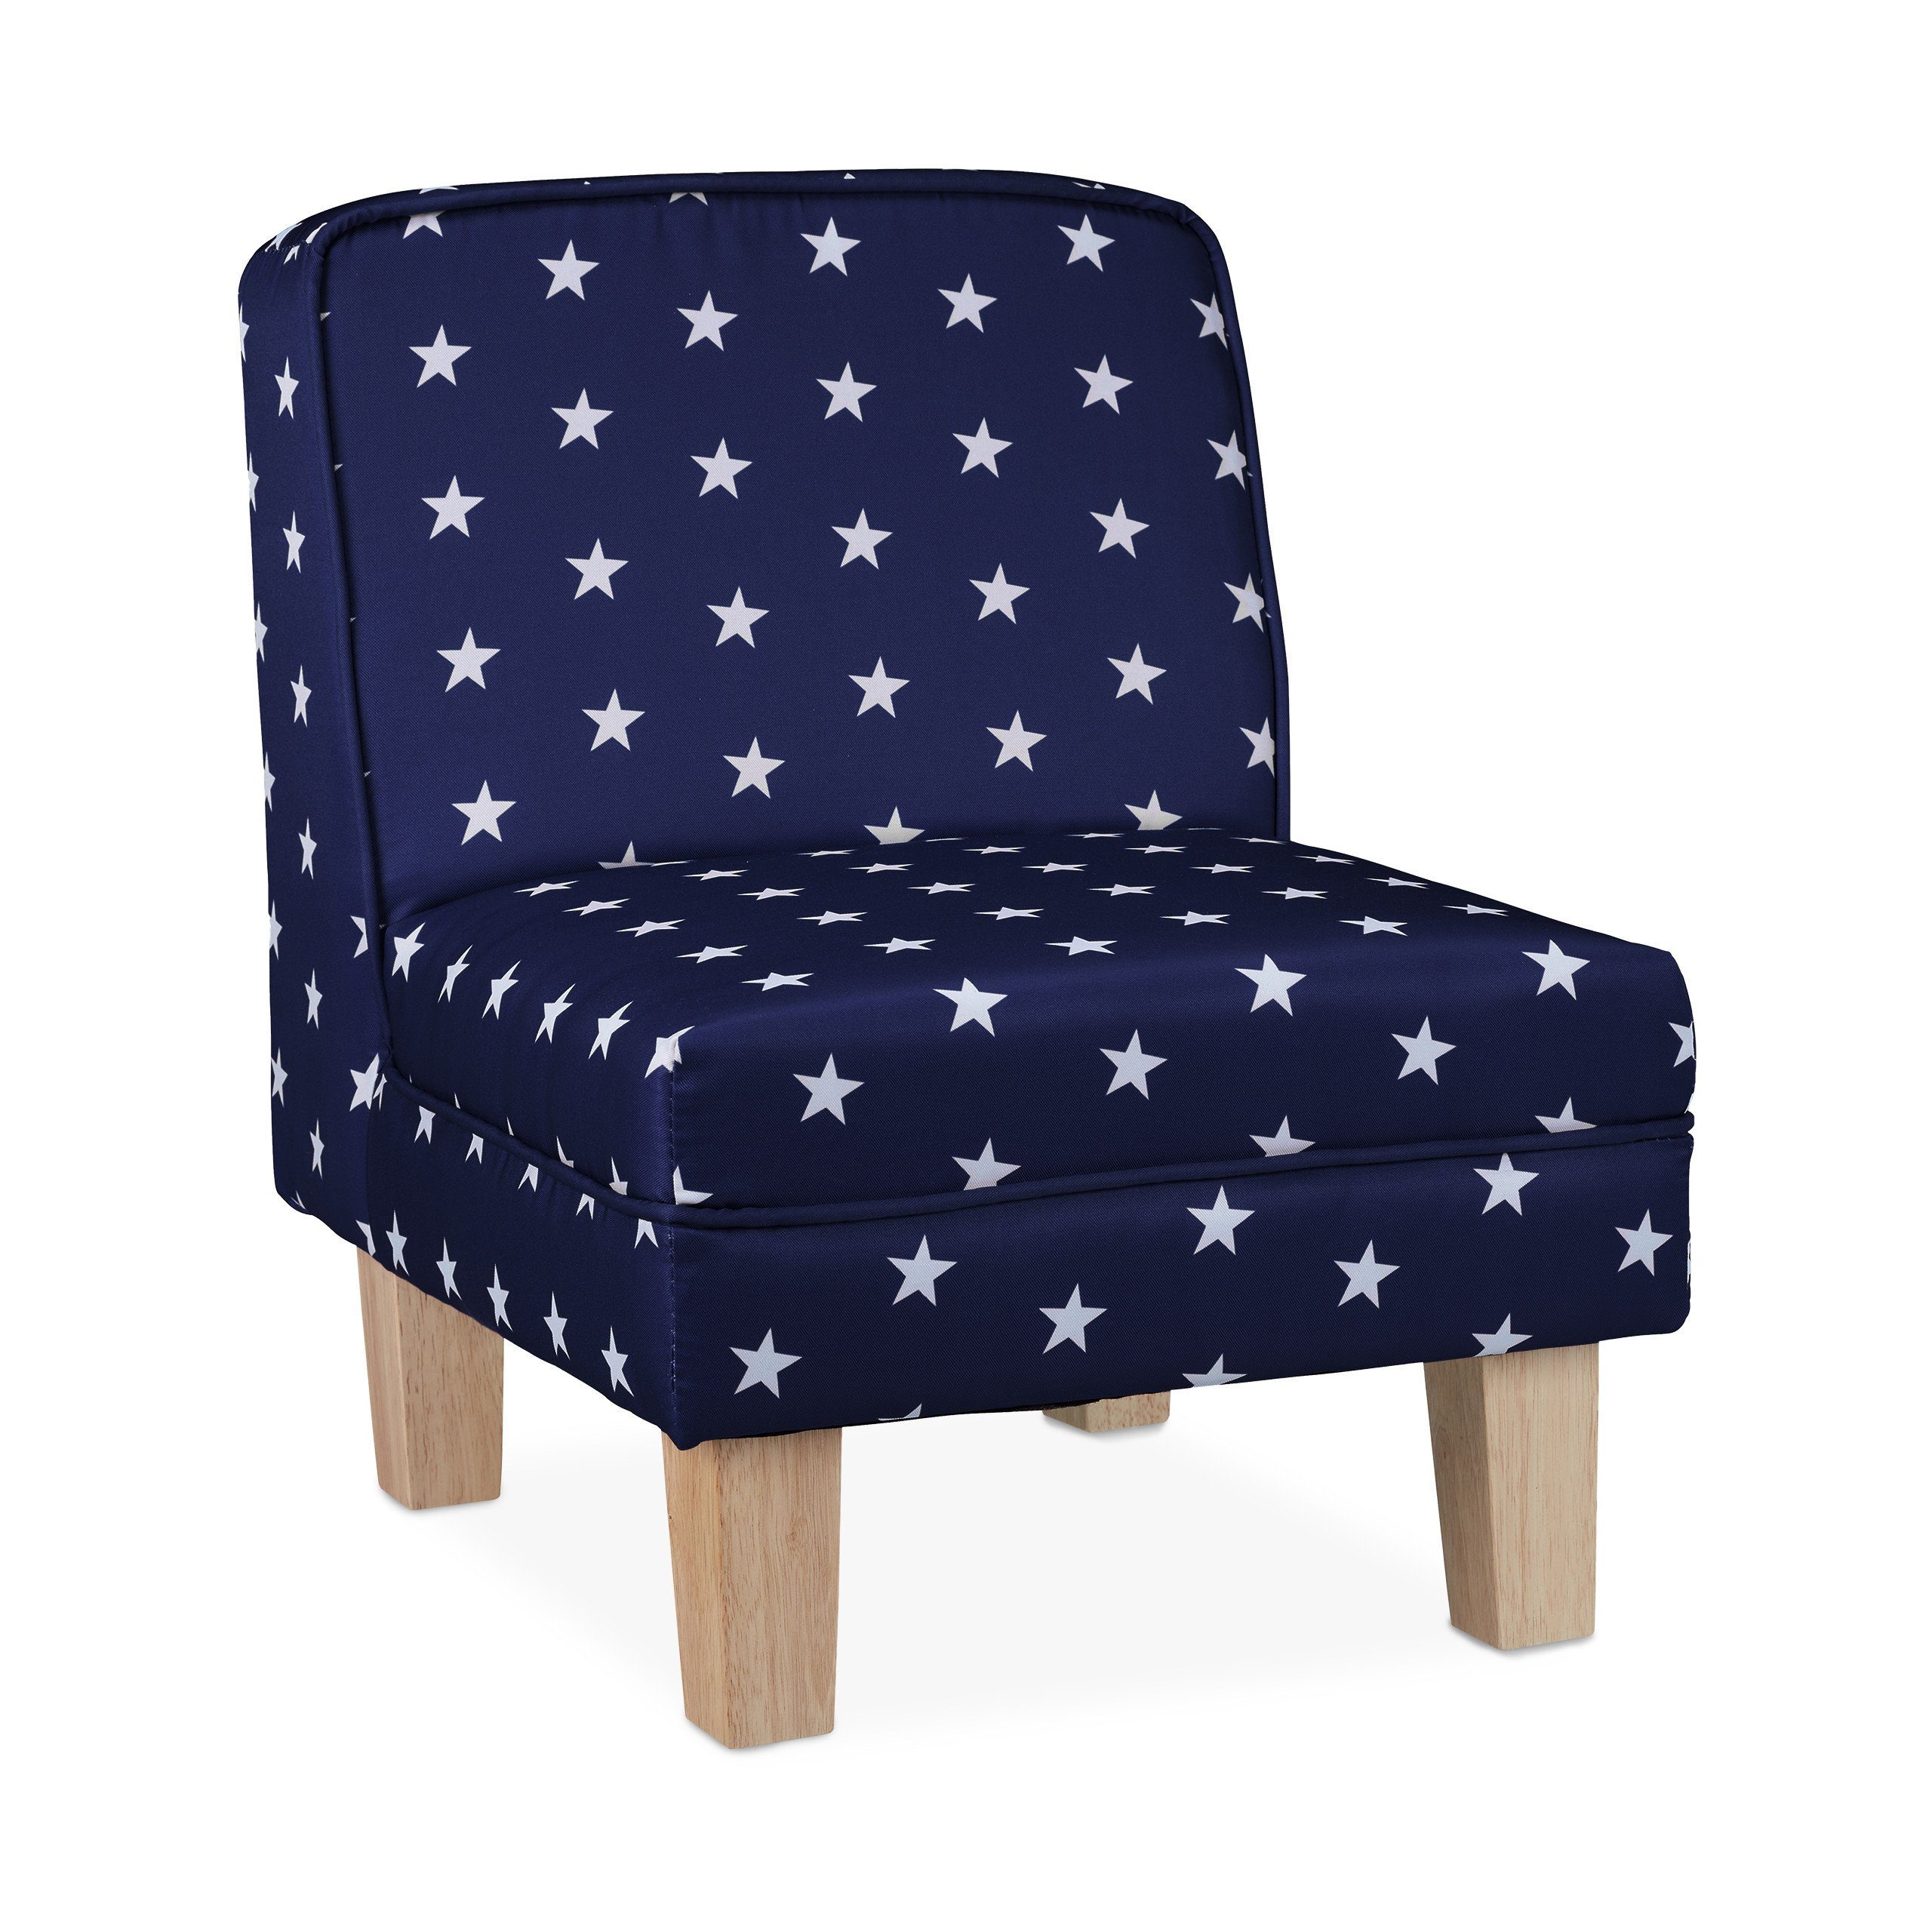 relaxdays Sessel Kindersessel mit Sternen, Dunkelblau Dunkelblau Weiß Hellbraun